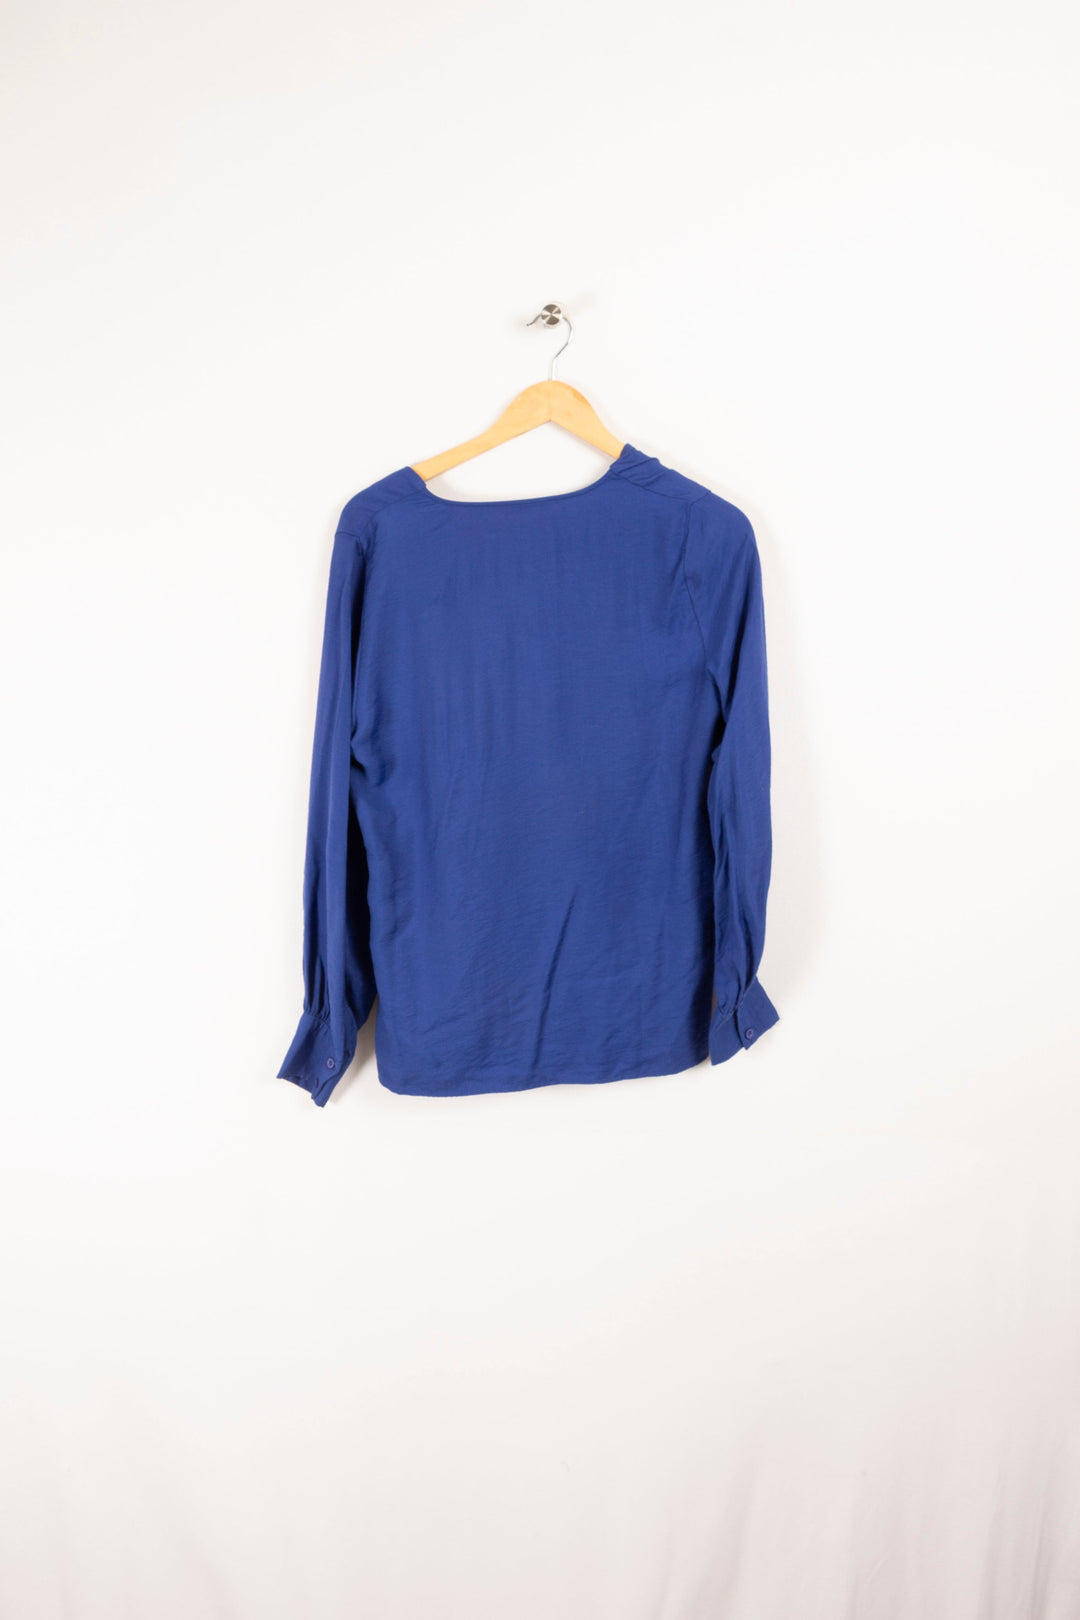 Blue sweater - Size M/38